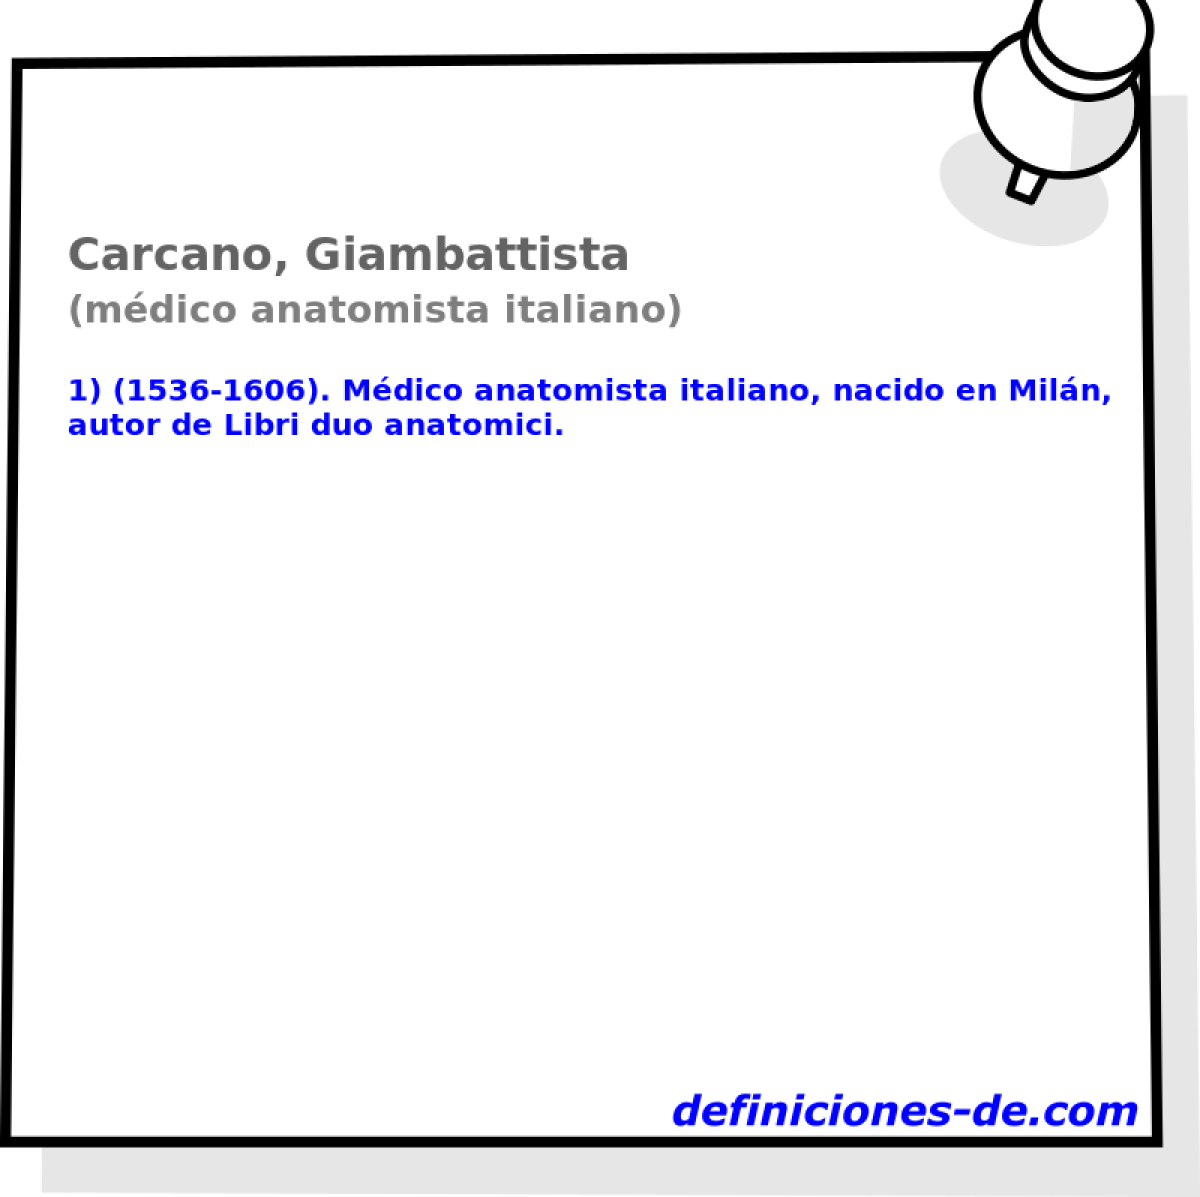 Carcano, Giambattista (mdico anatomista italiano)